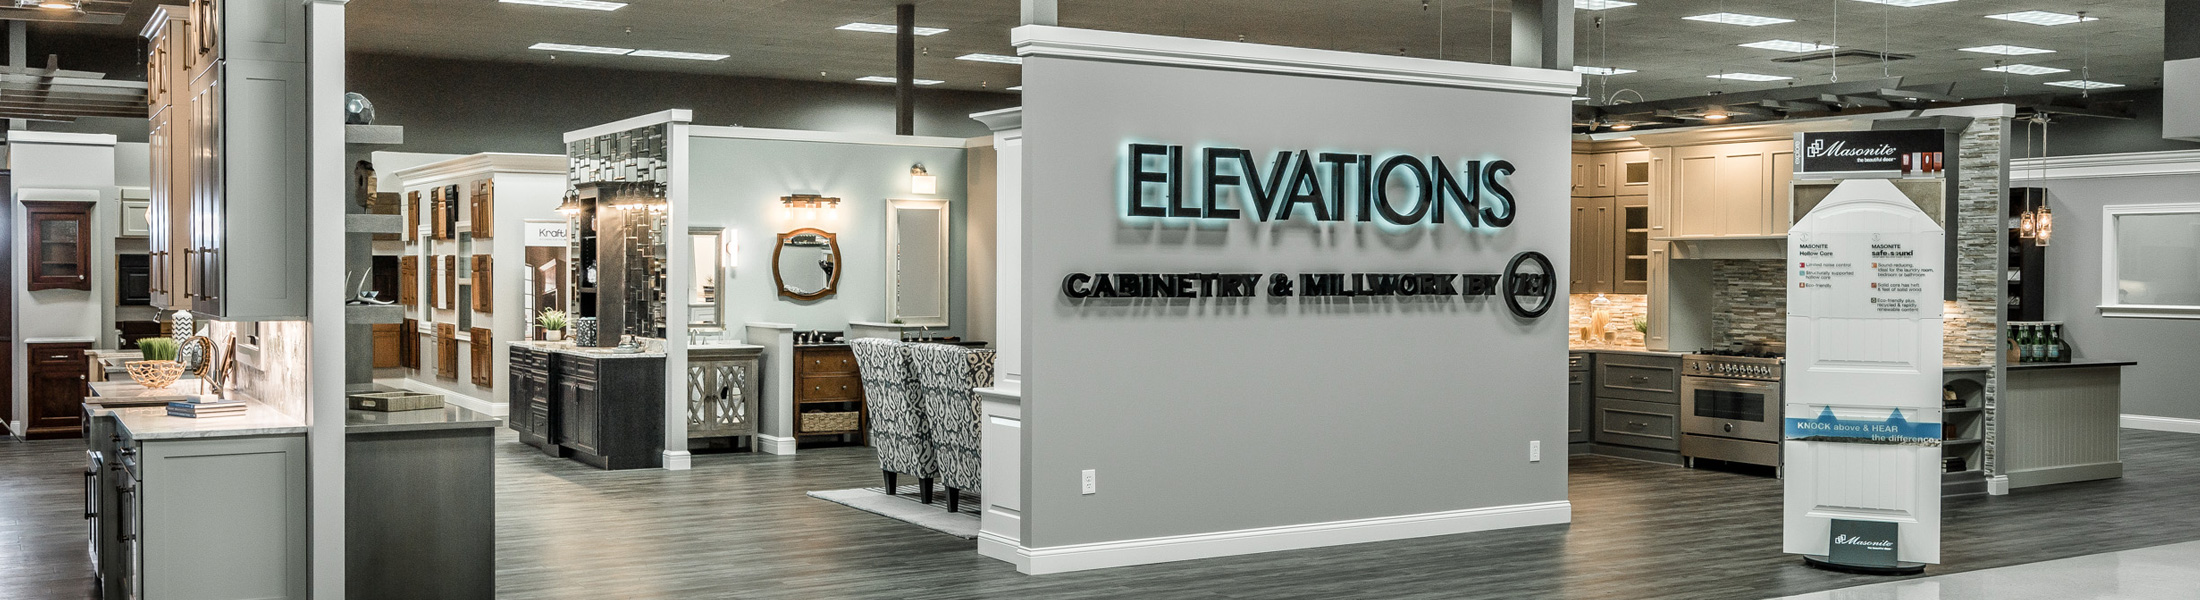 Elevations home remodeling design showroom in Louisville, KY